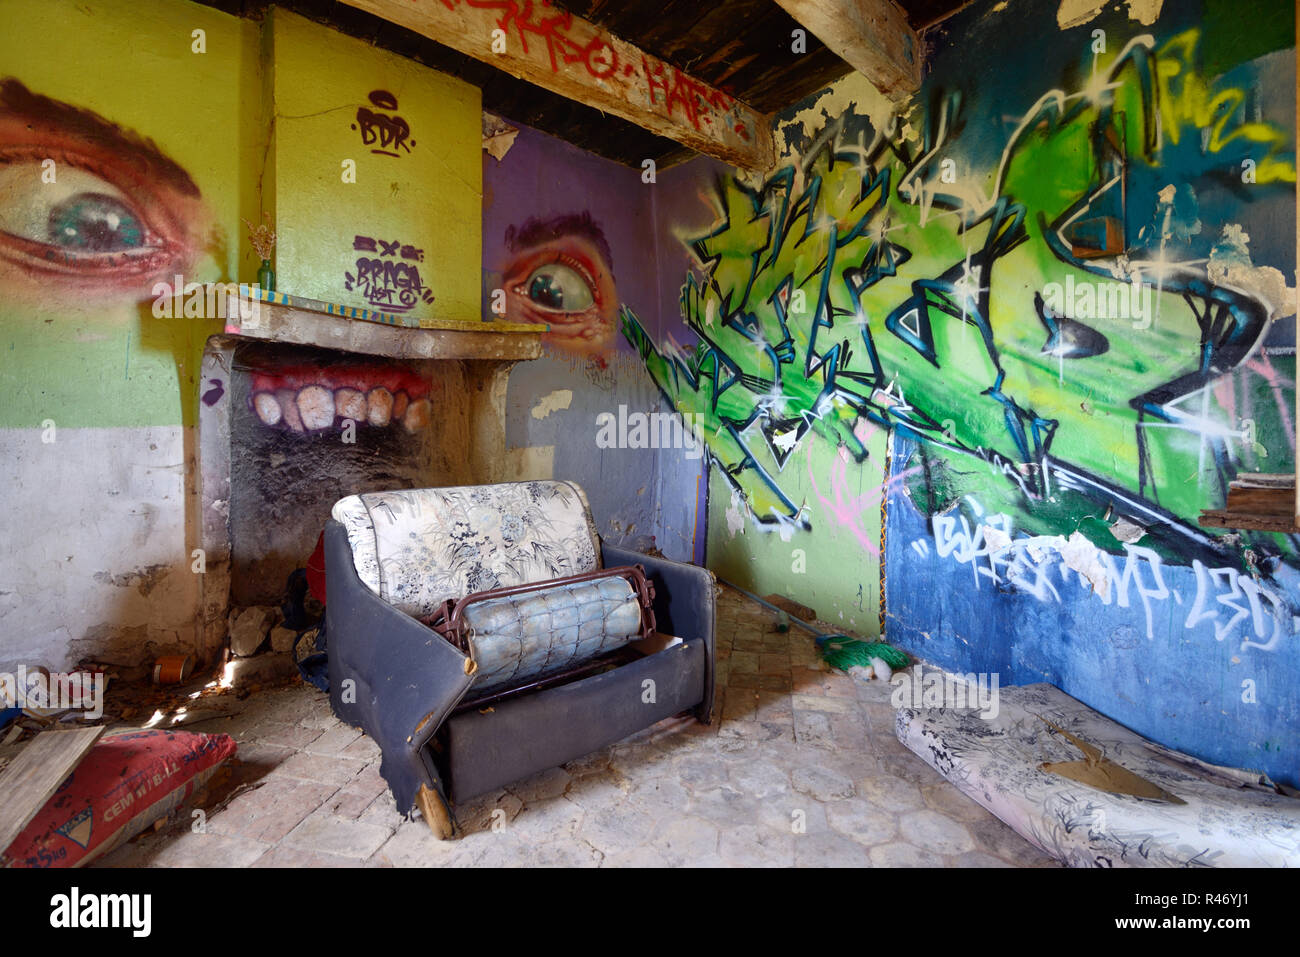 Graffiti Covered Walls, Rubbish Strewn Floors & Broken Sofa in Squat Interior of Abandoned House Provence France Stock Photo